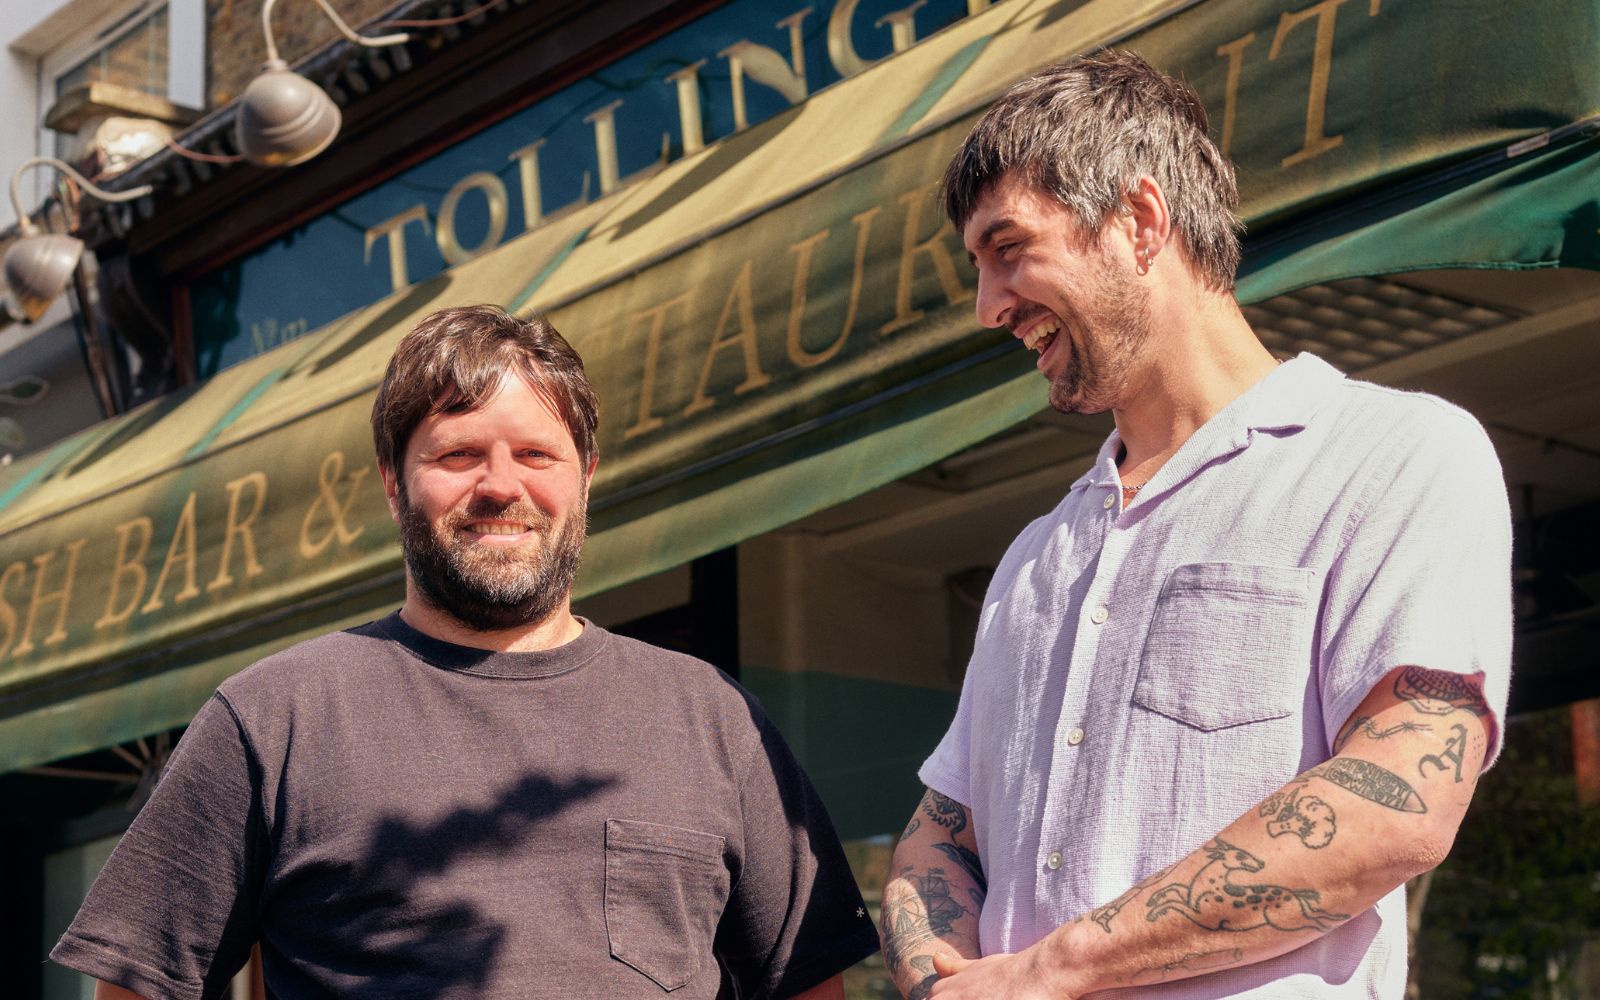 two men standing outside Tollington's